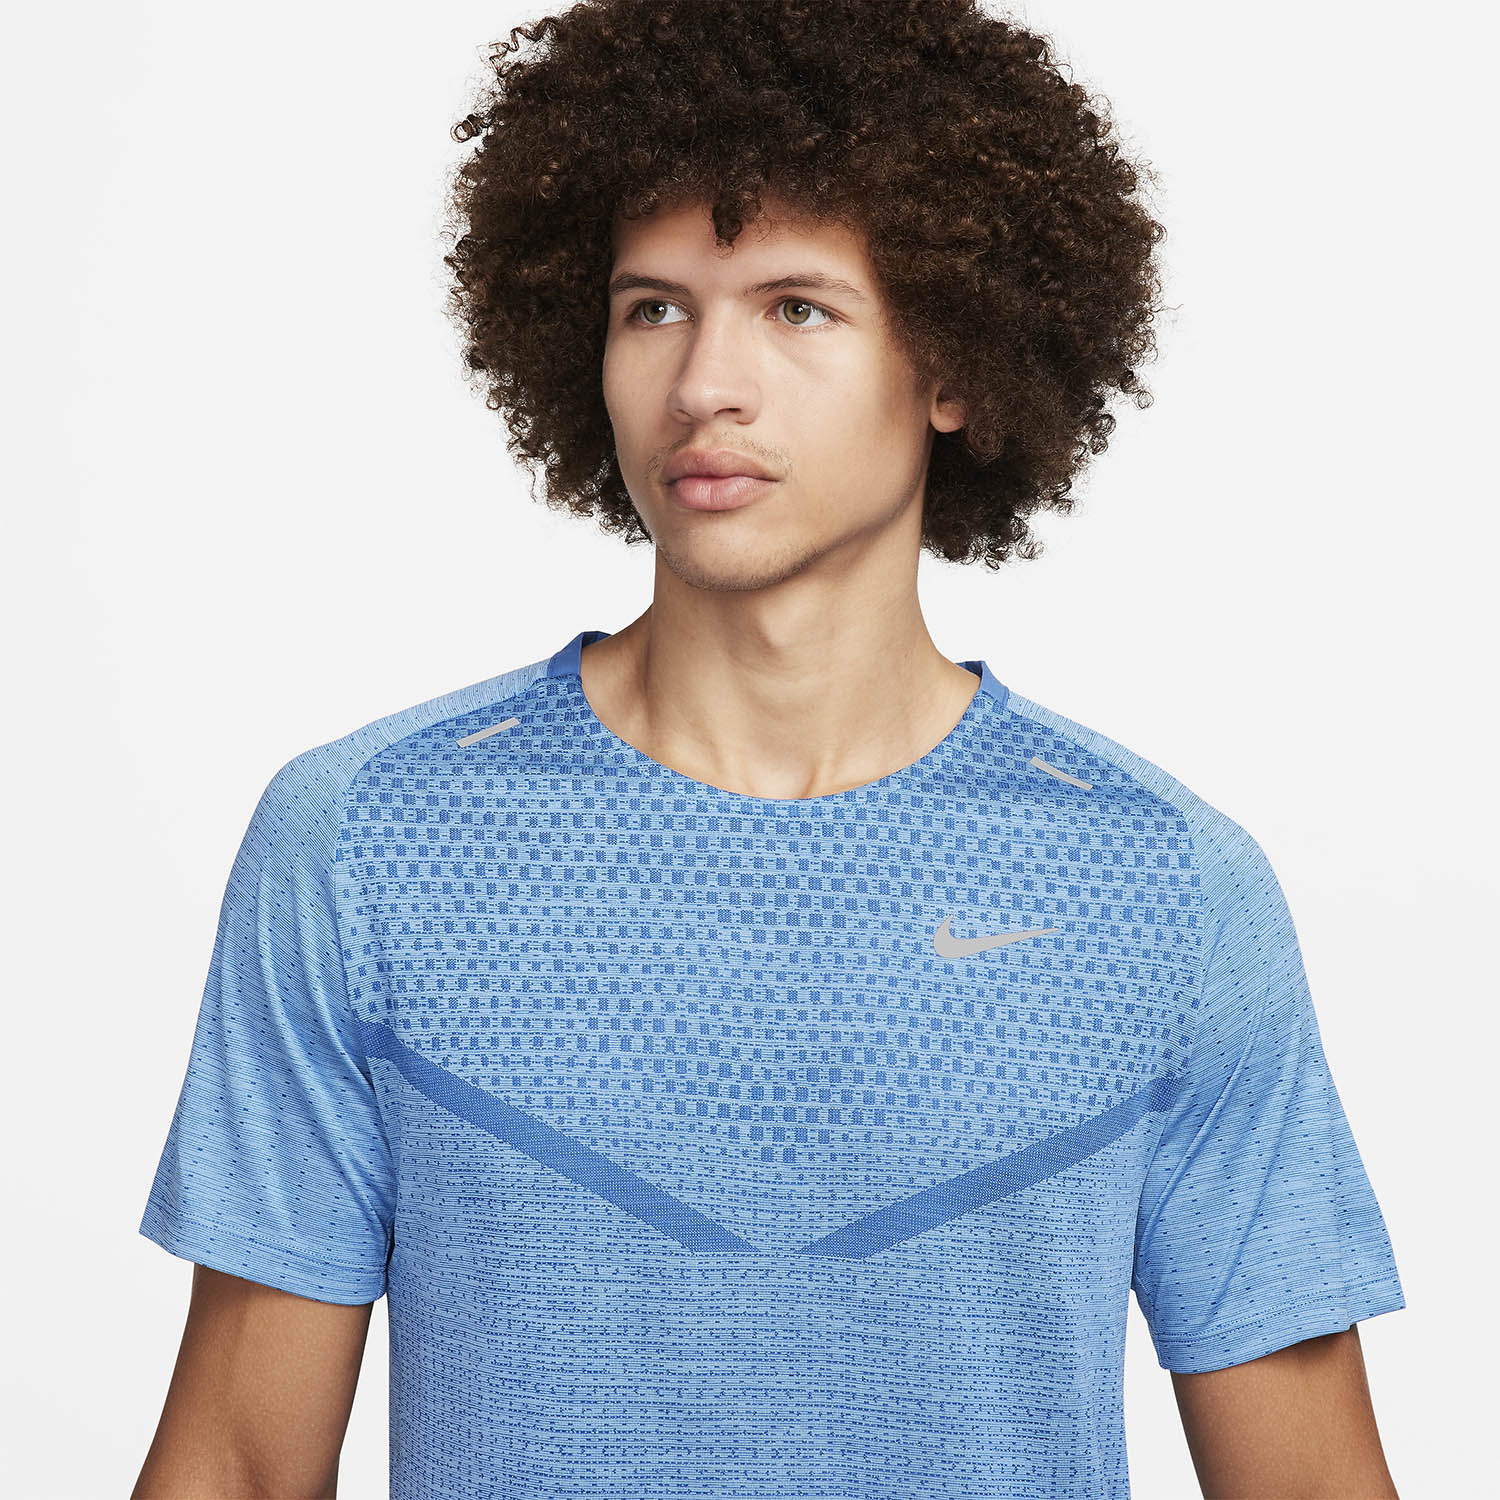 Nike Dri-FIT ADV Techknit Ultra Camiseta - Star Blue/Reflective Silver